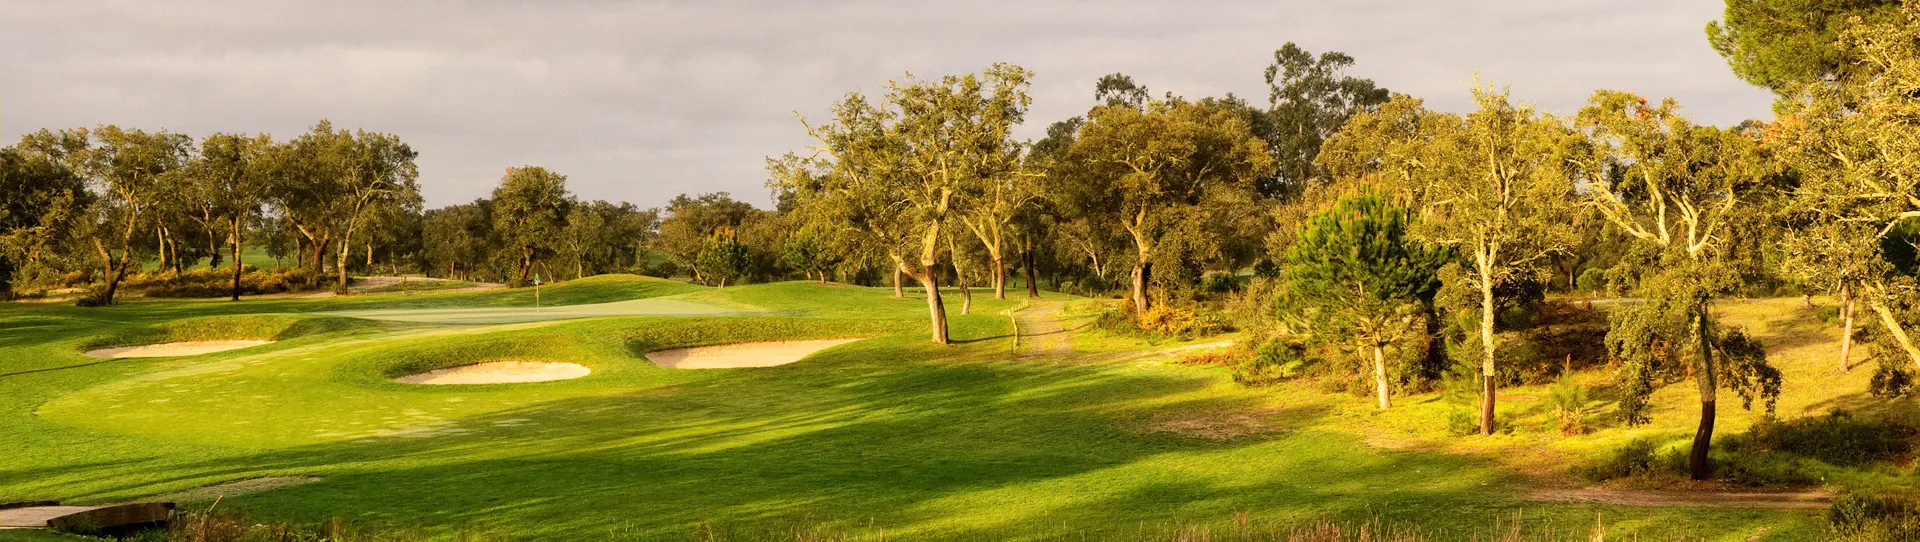 Portugal golf courses - Ribagolfe Oaks Golf Course (ex Riba II) - Photo 2